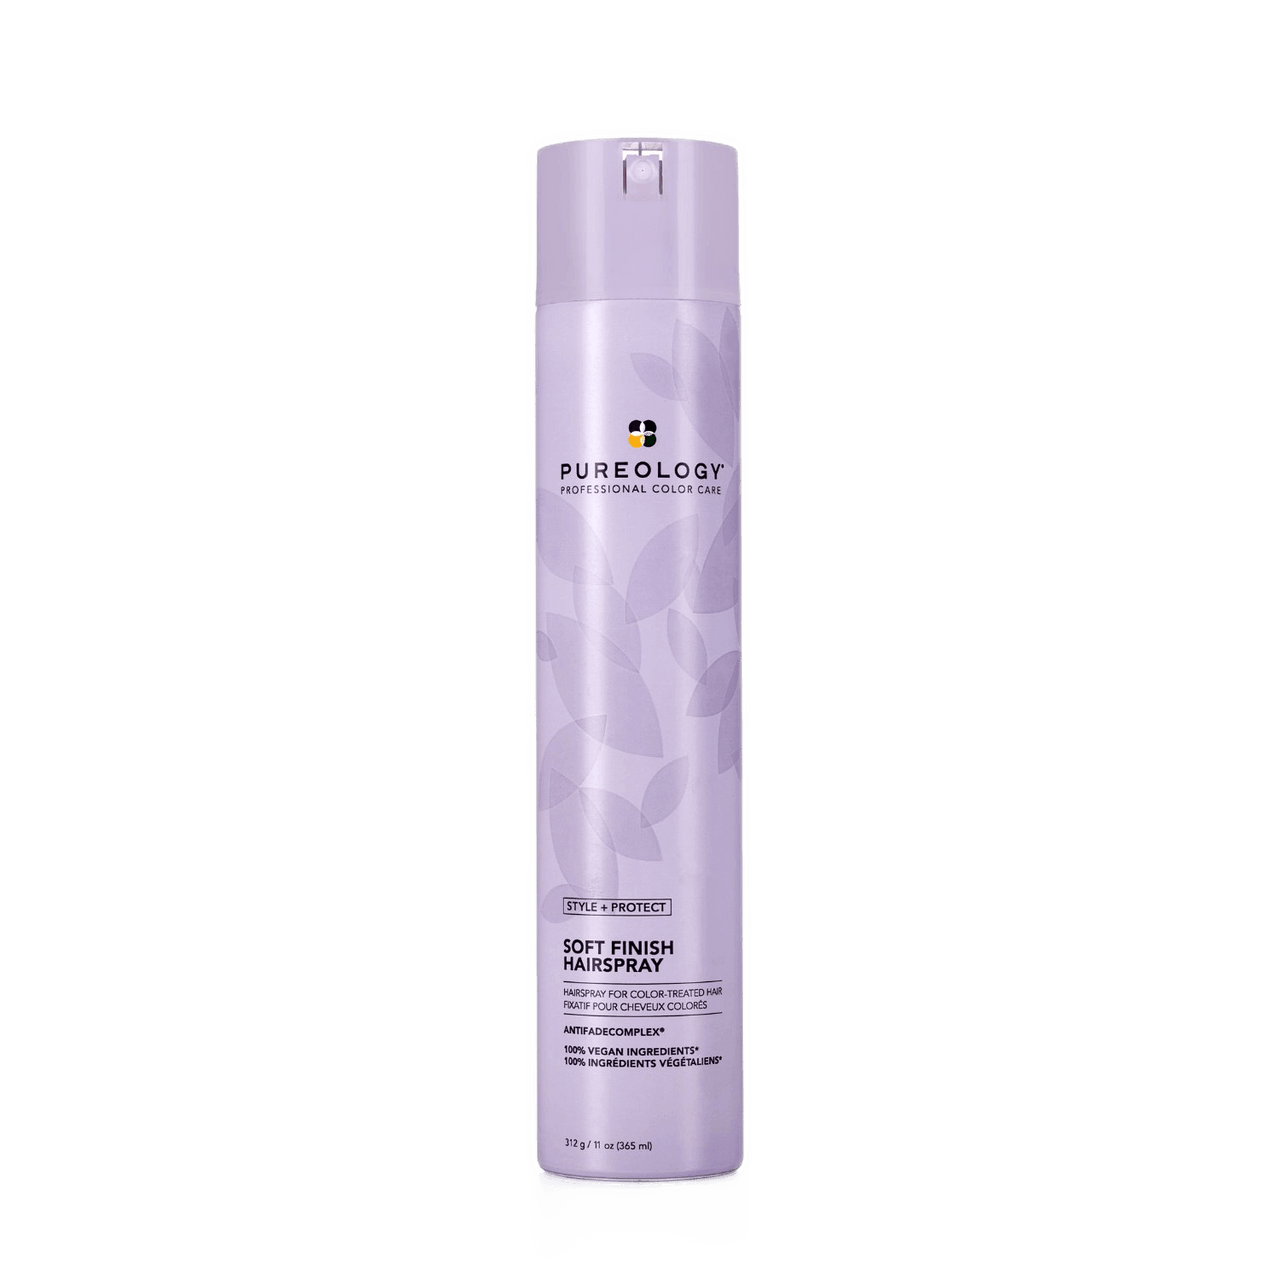 Pureology Style + Protect Soft Finish Hairspray 312 g